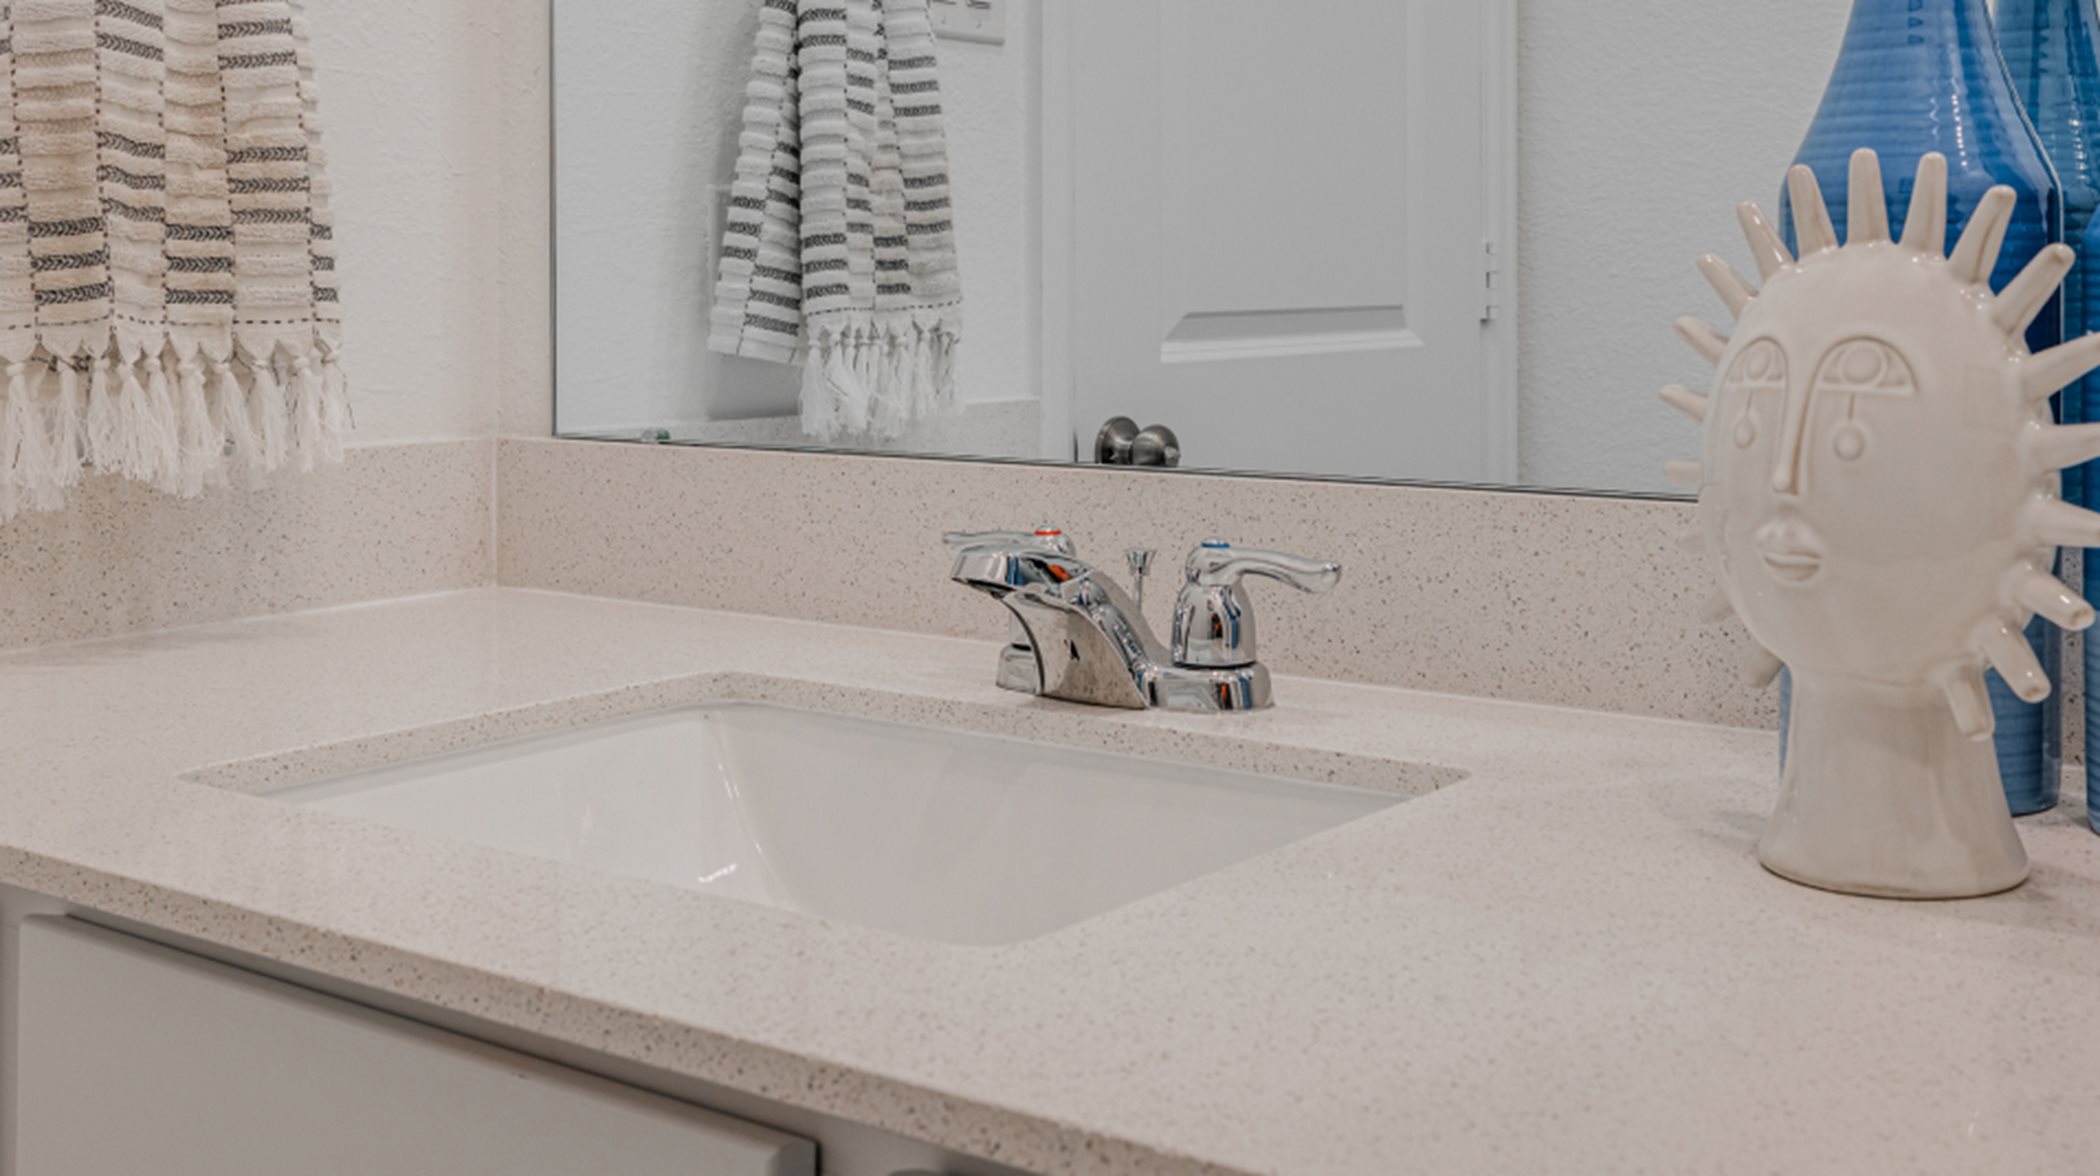 Stylish and durable granite or quartz countertops in bathrooms